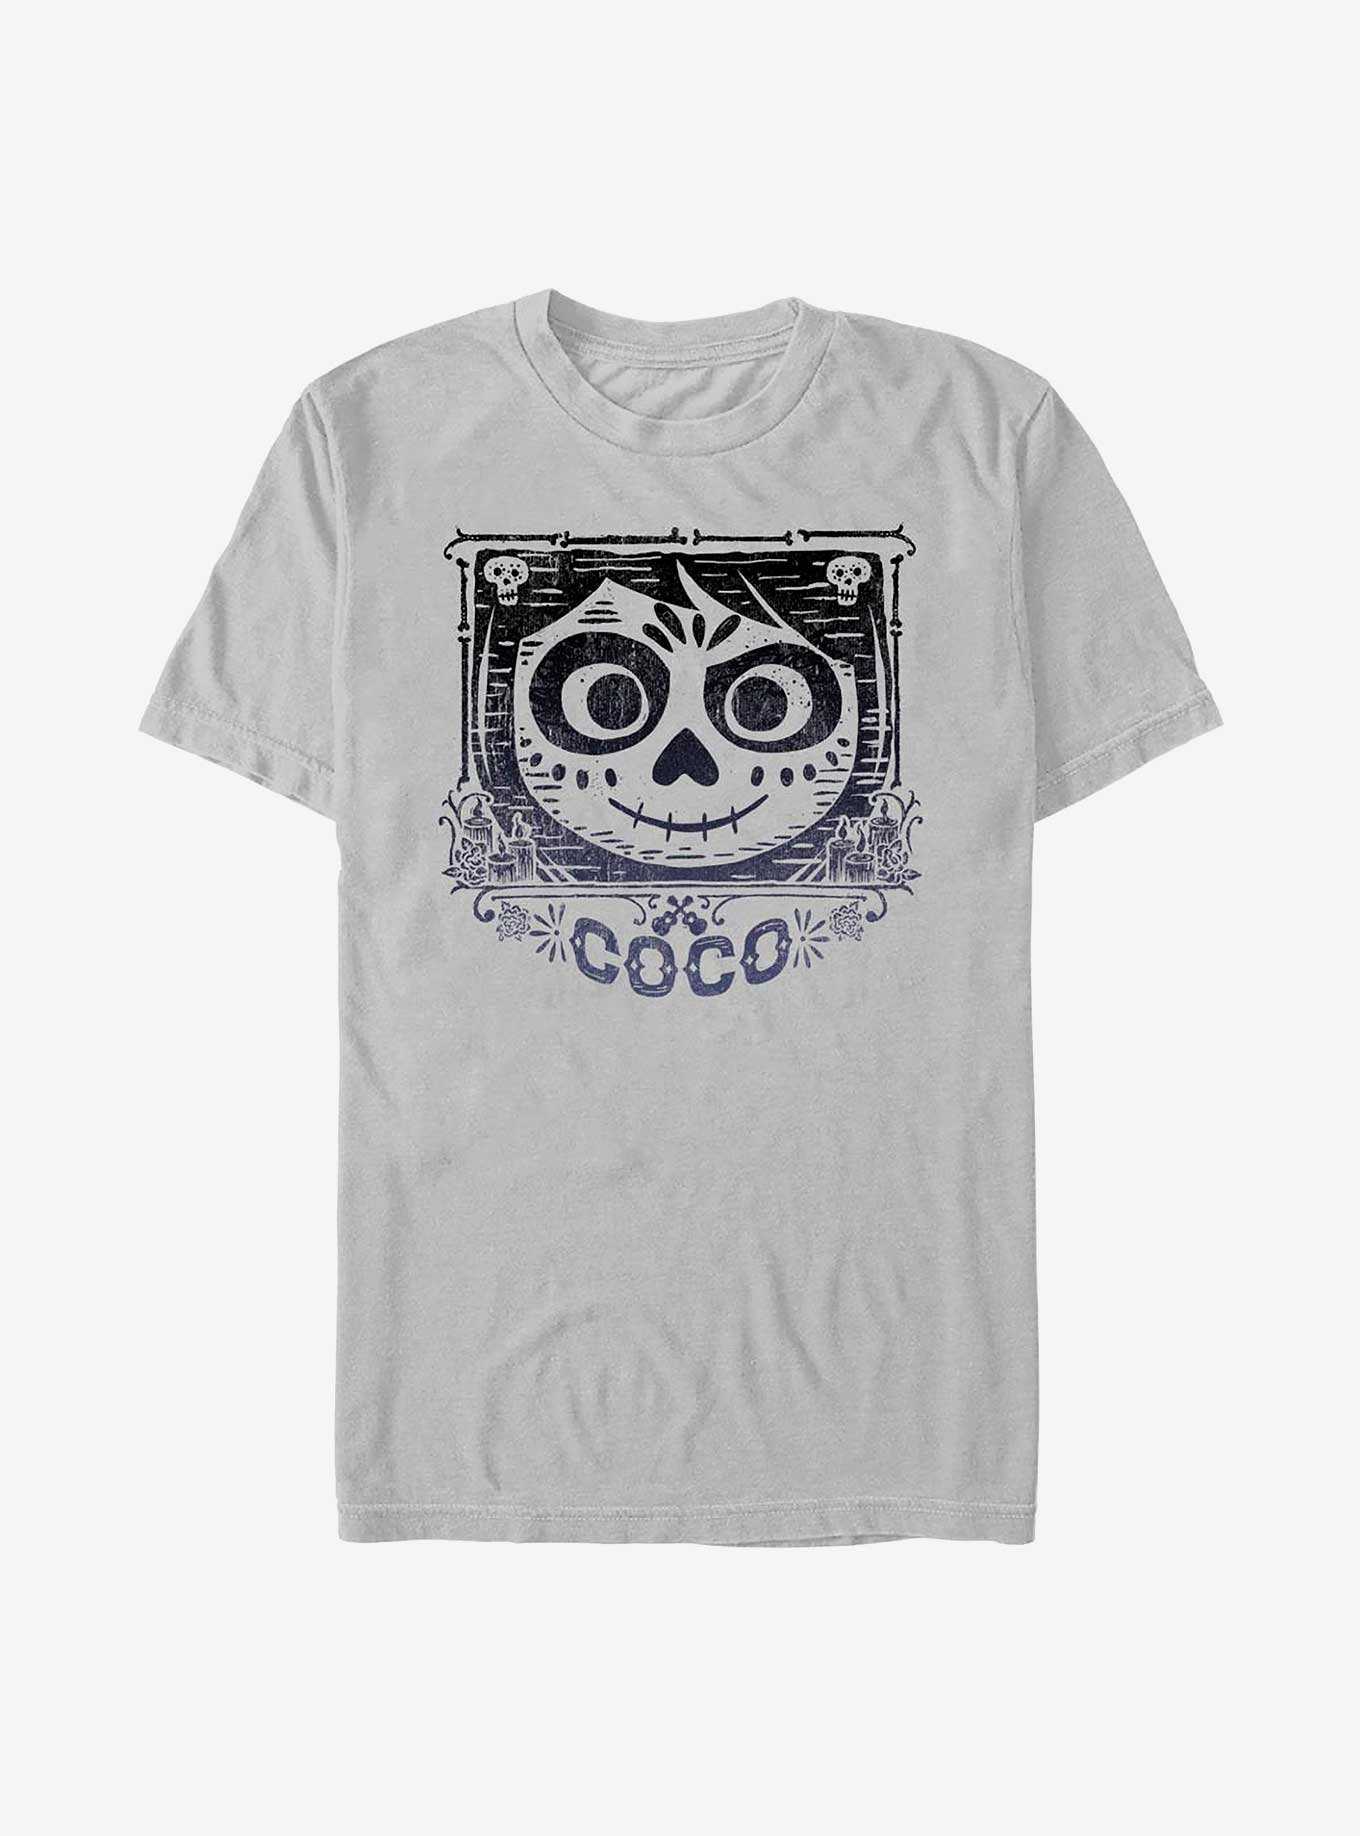 Disney Pixar Coco Seizure Eyes T-Shirt, , hi-res